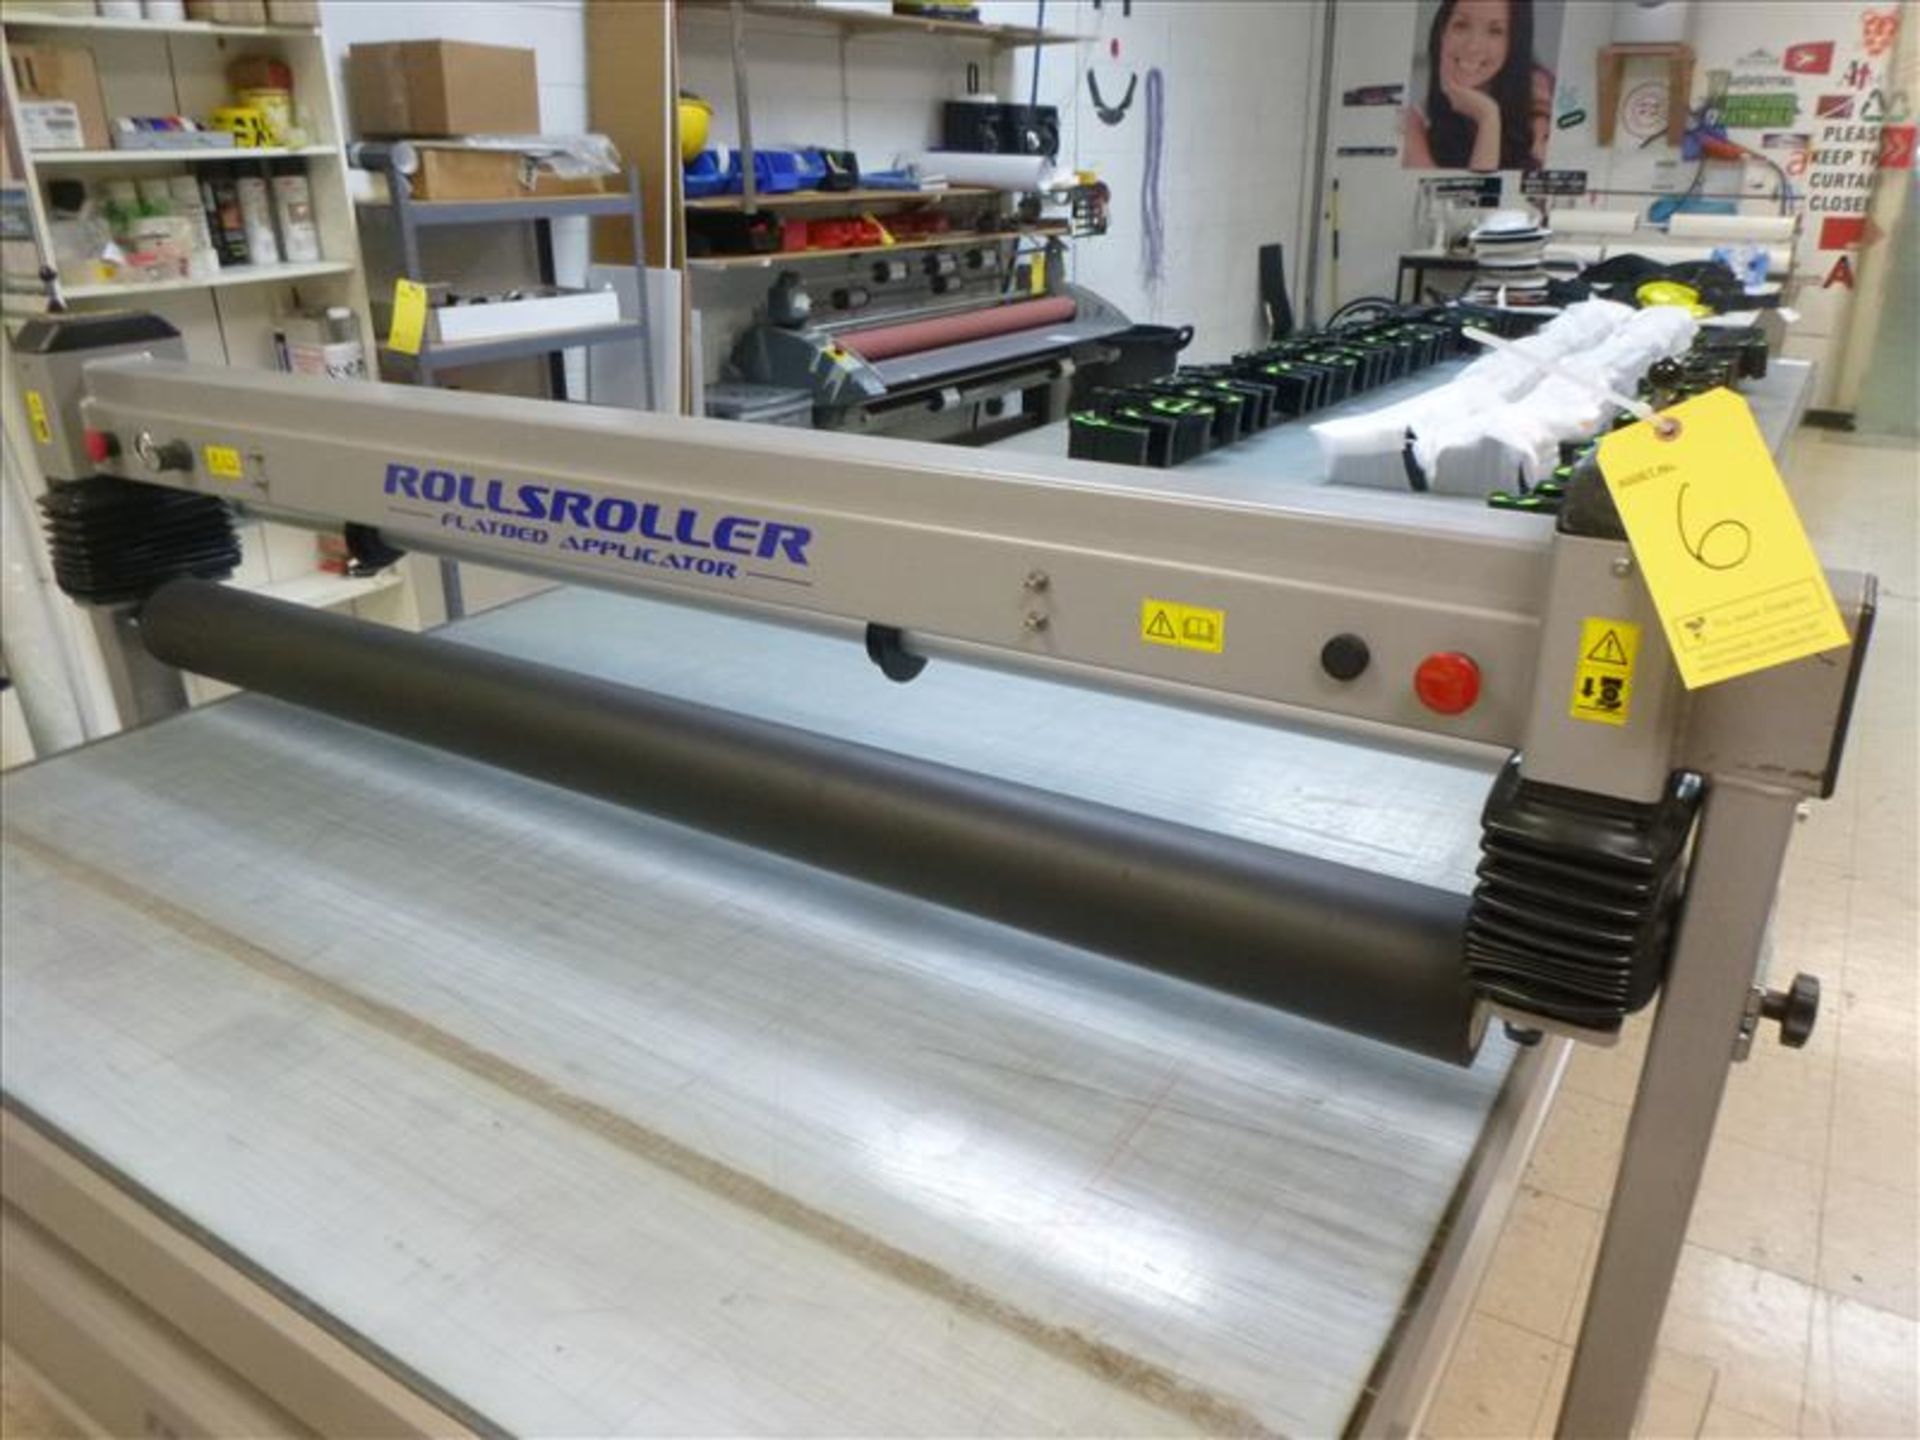 RollsRoller vinyl, film and laminant flatbed applicator, mod. 540, 66" x 213" work area, 64" roller